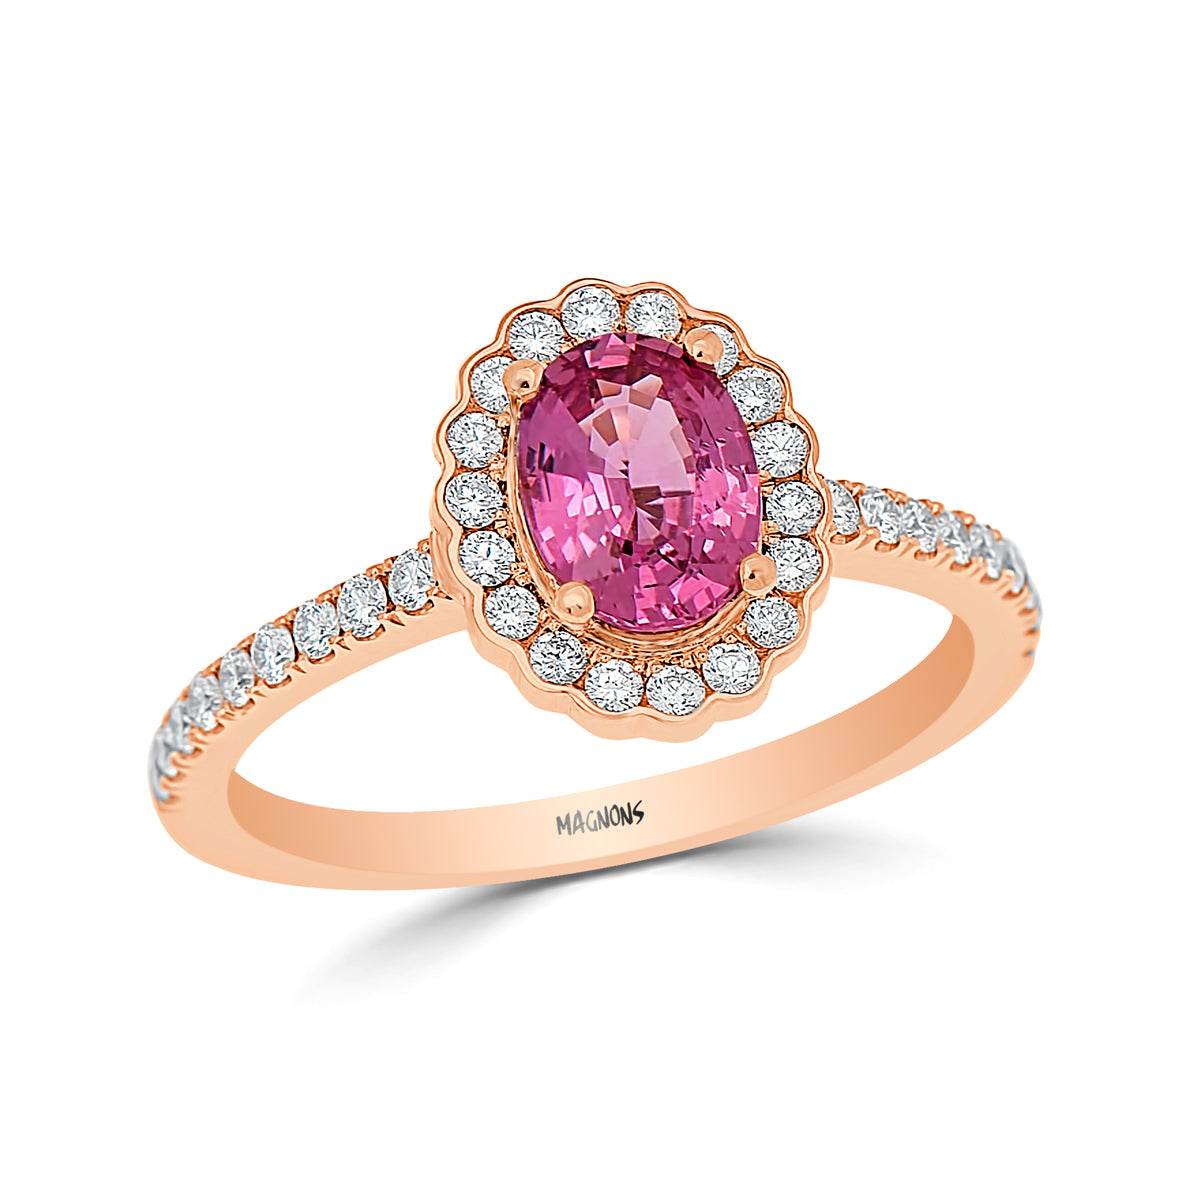 Pink gemstone rings | Eden Garden Jewelry™